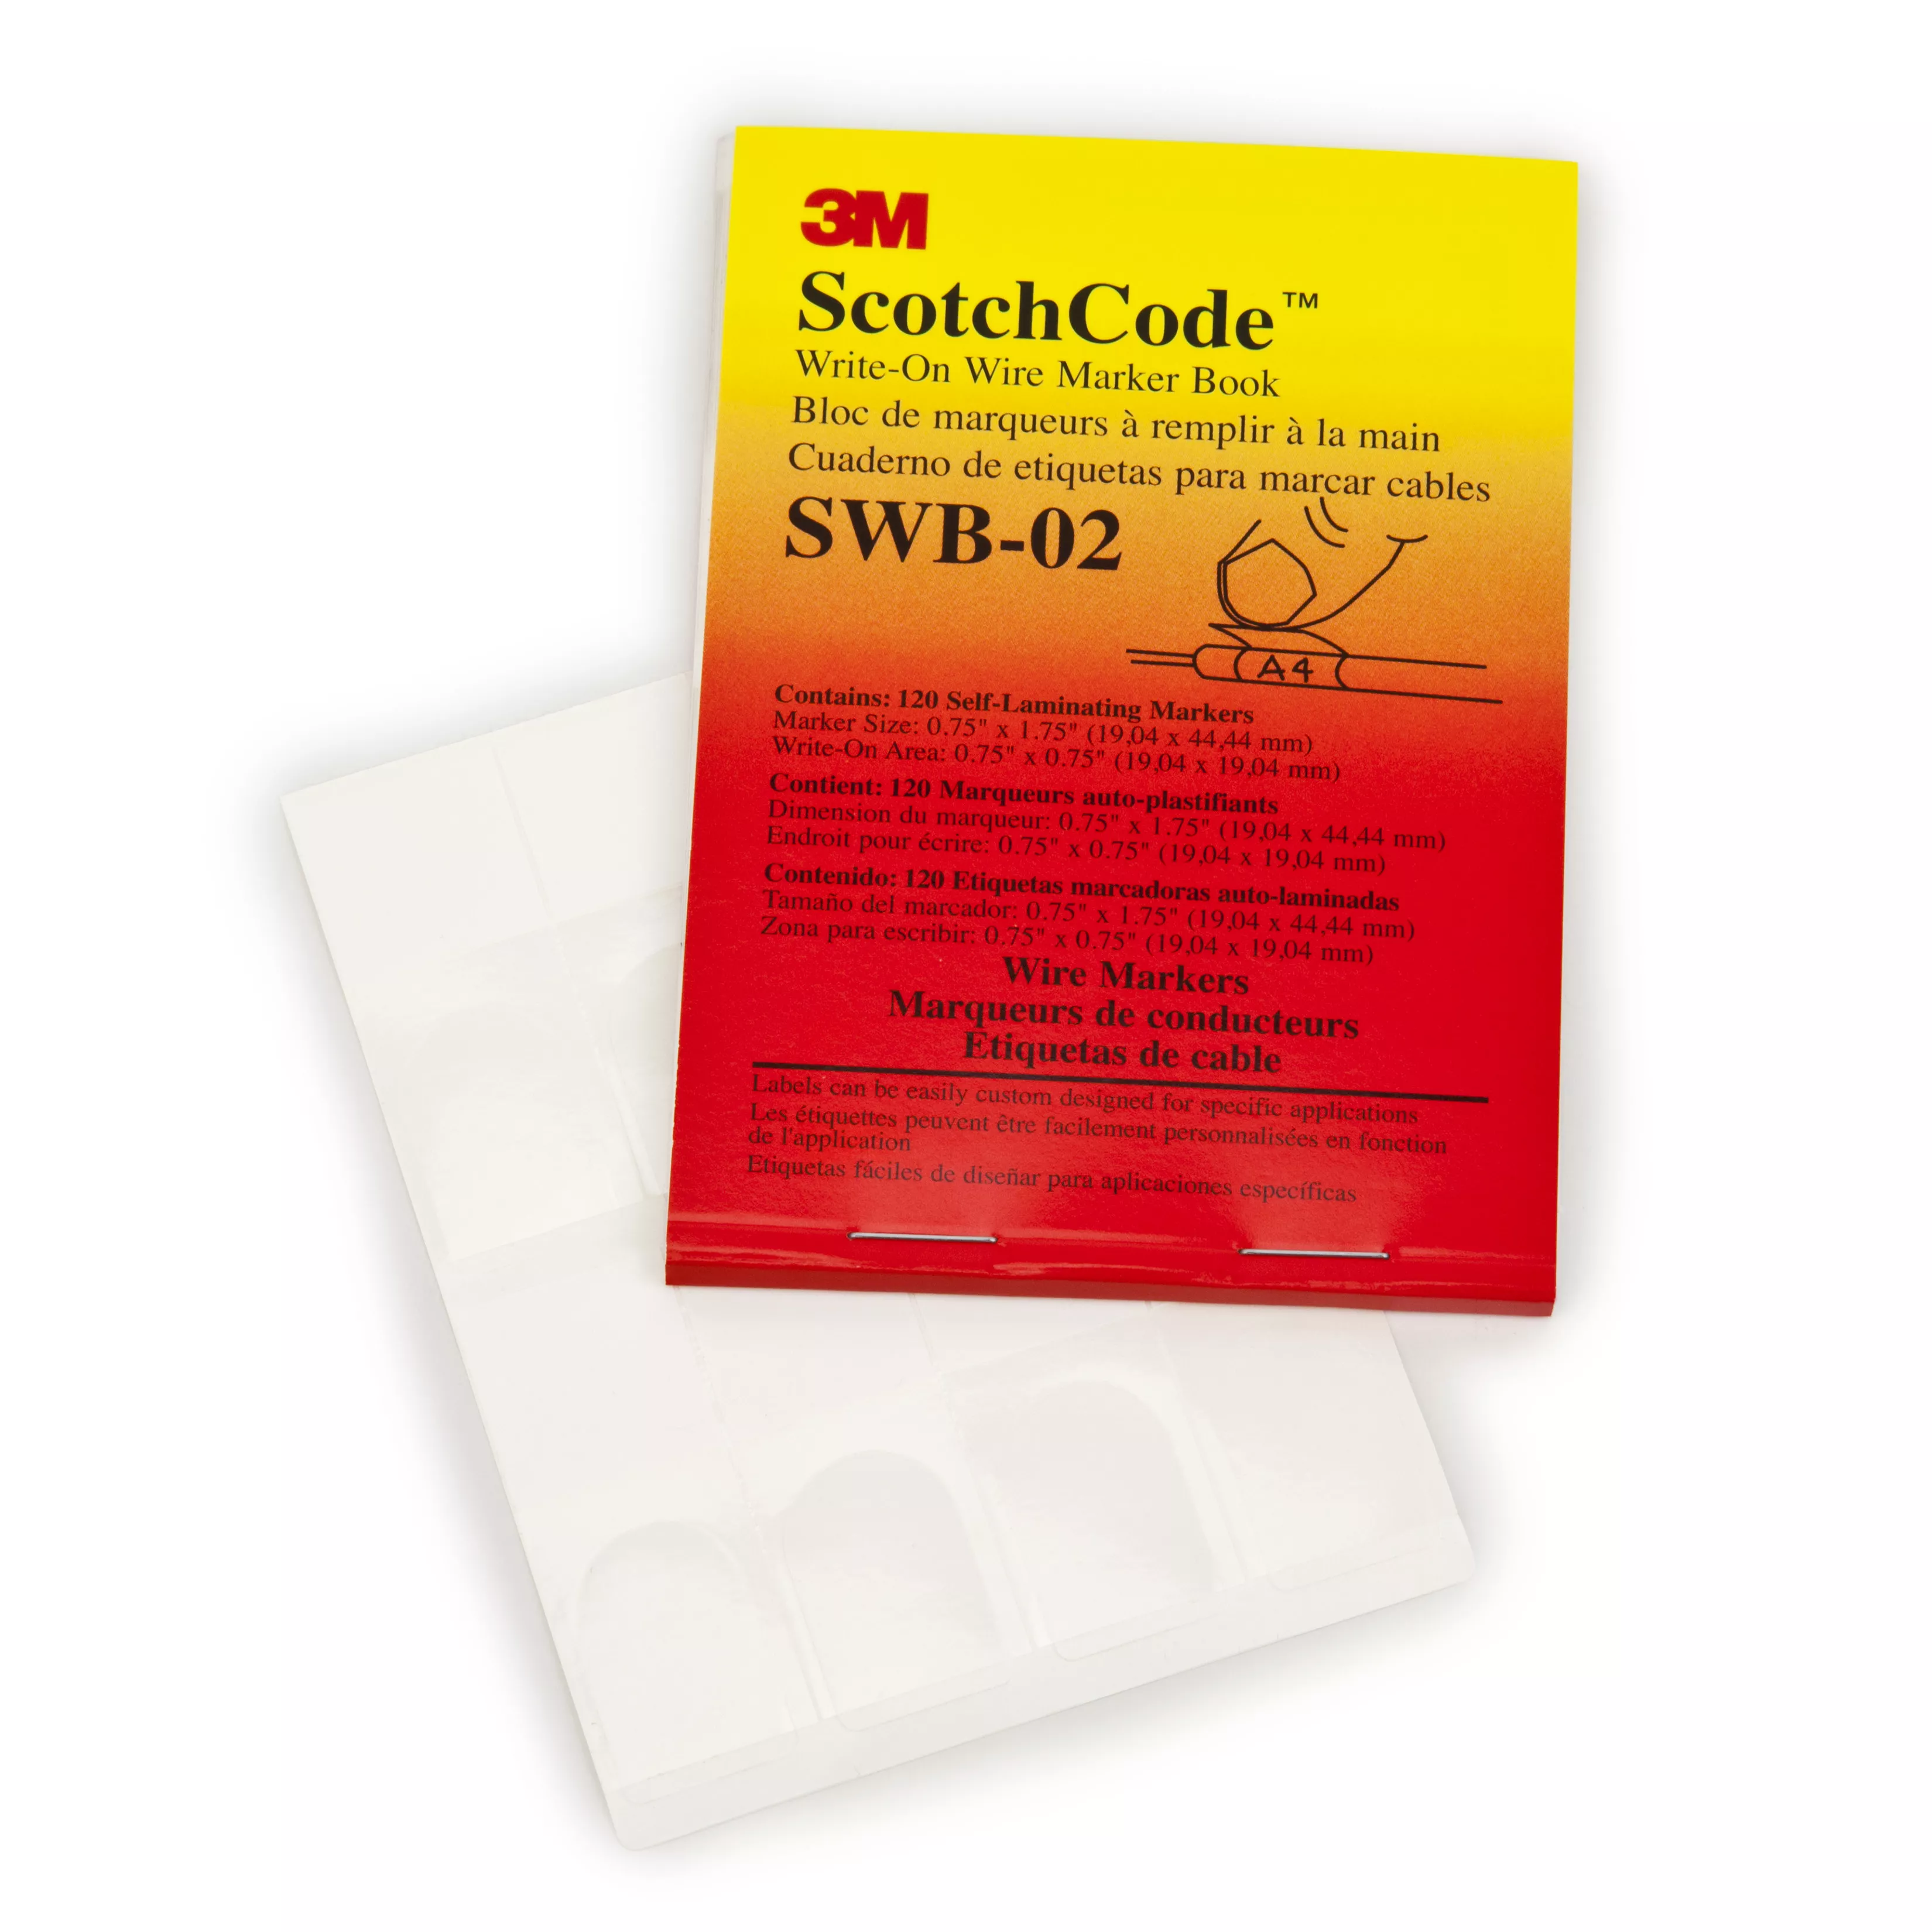 SKU 7000058801 | 3M™ ScotchCode™ Write-On Wire Marker Book SWB-02